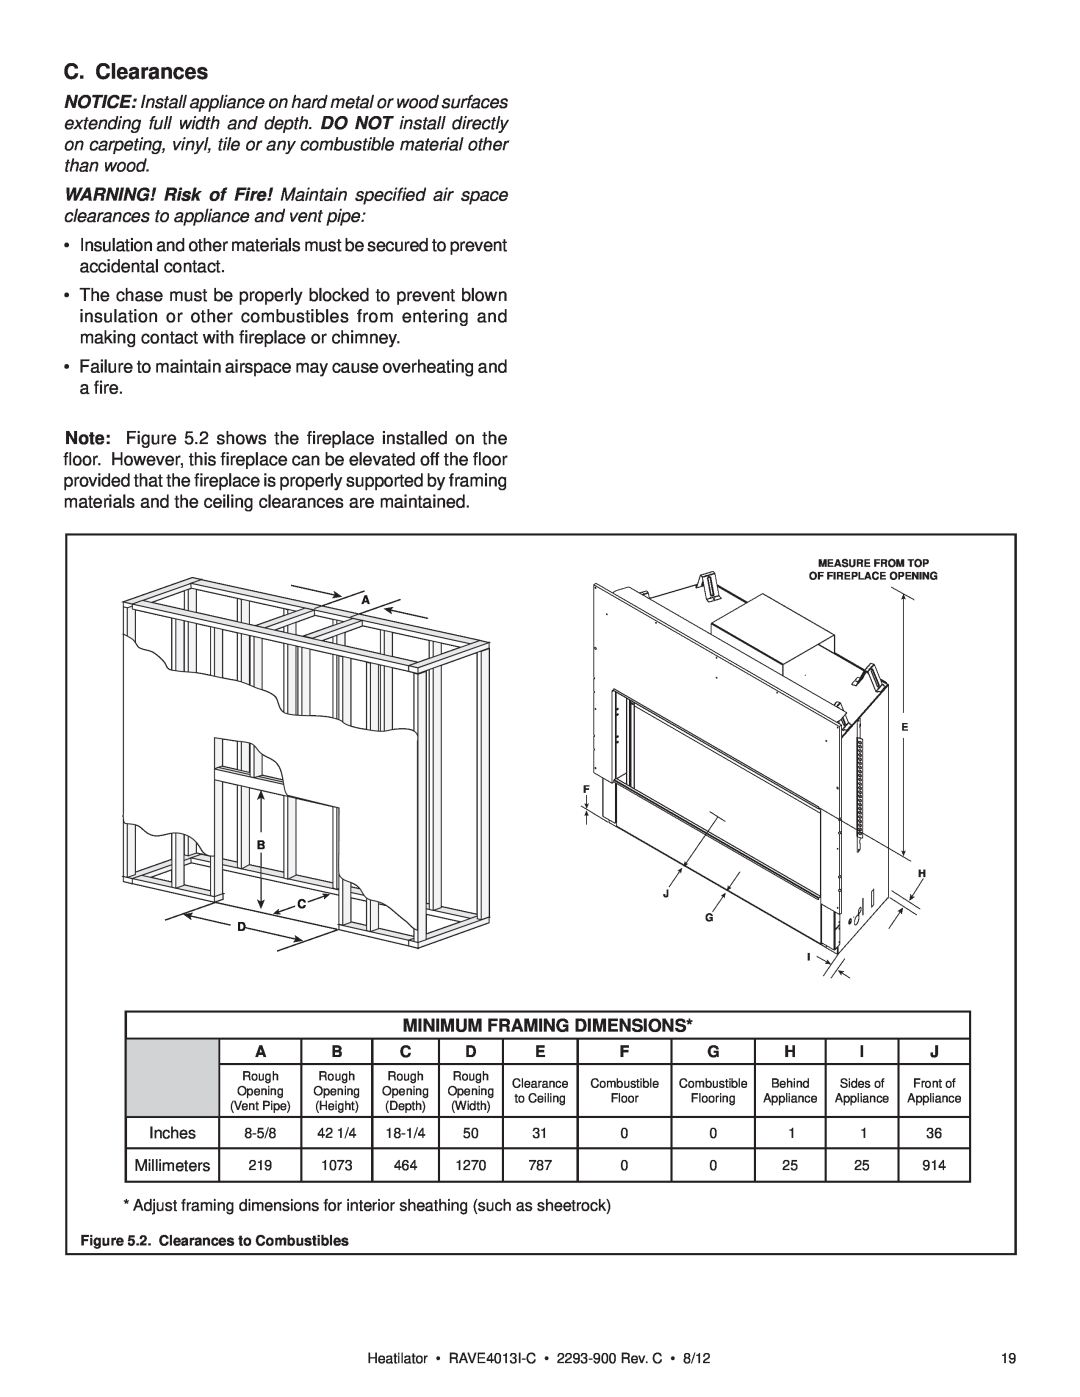 Heatiator Rave4013i-c owner manual C. Clearances, Minimum Framing Dimensions 